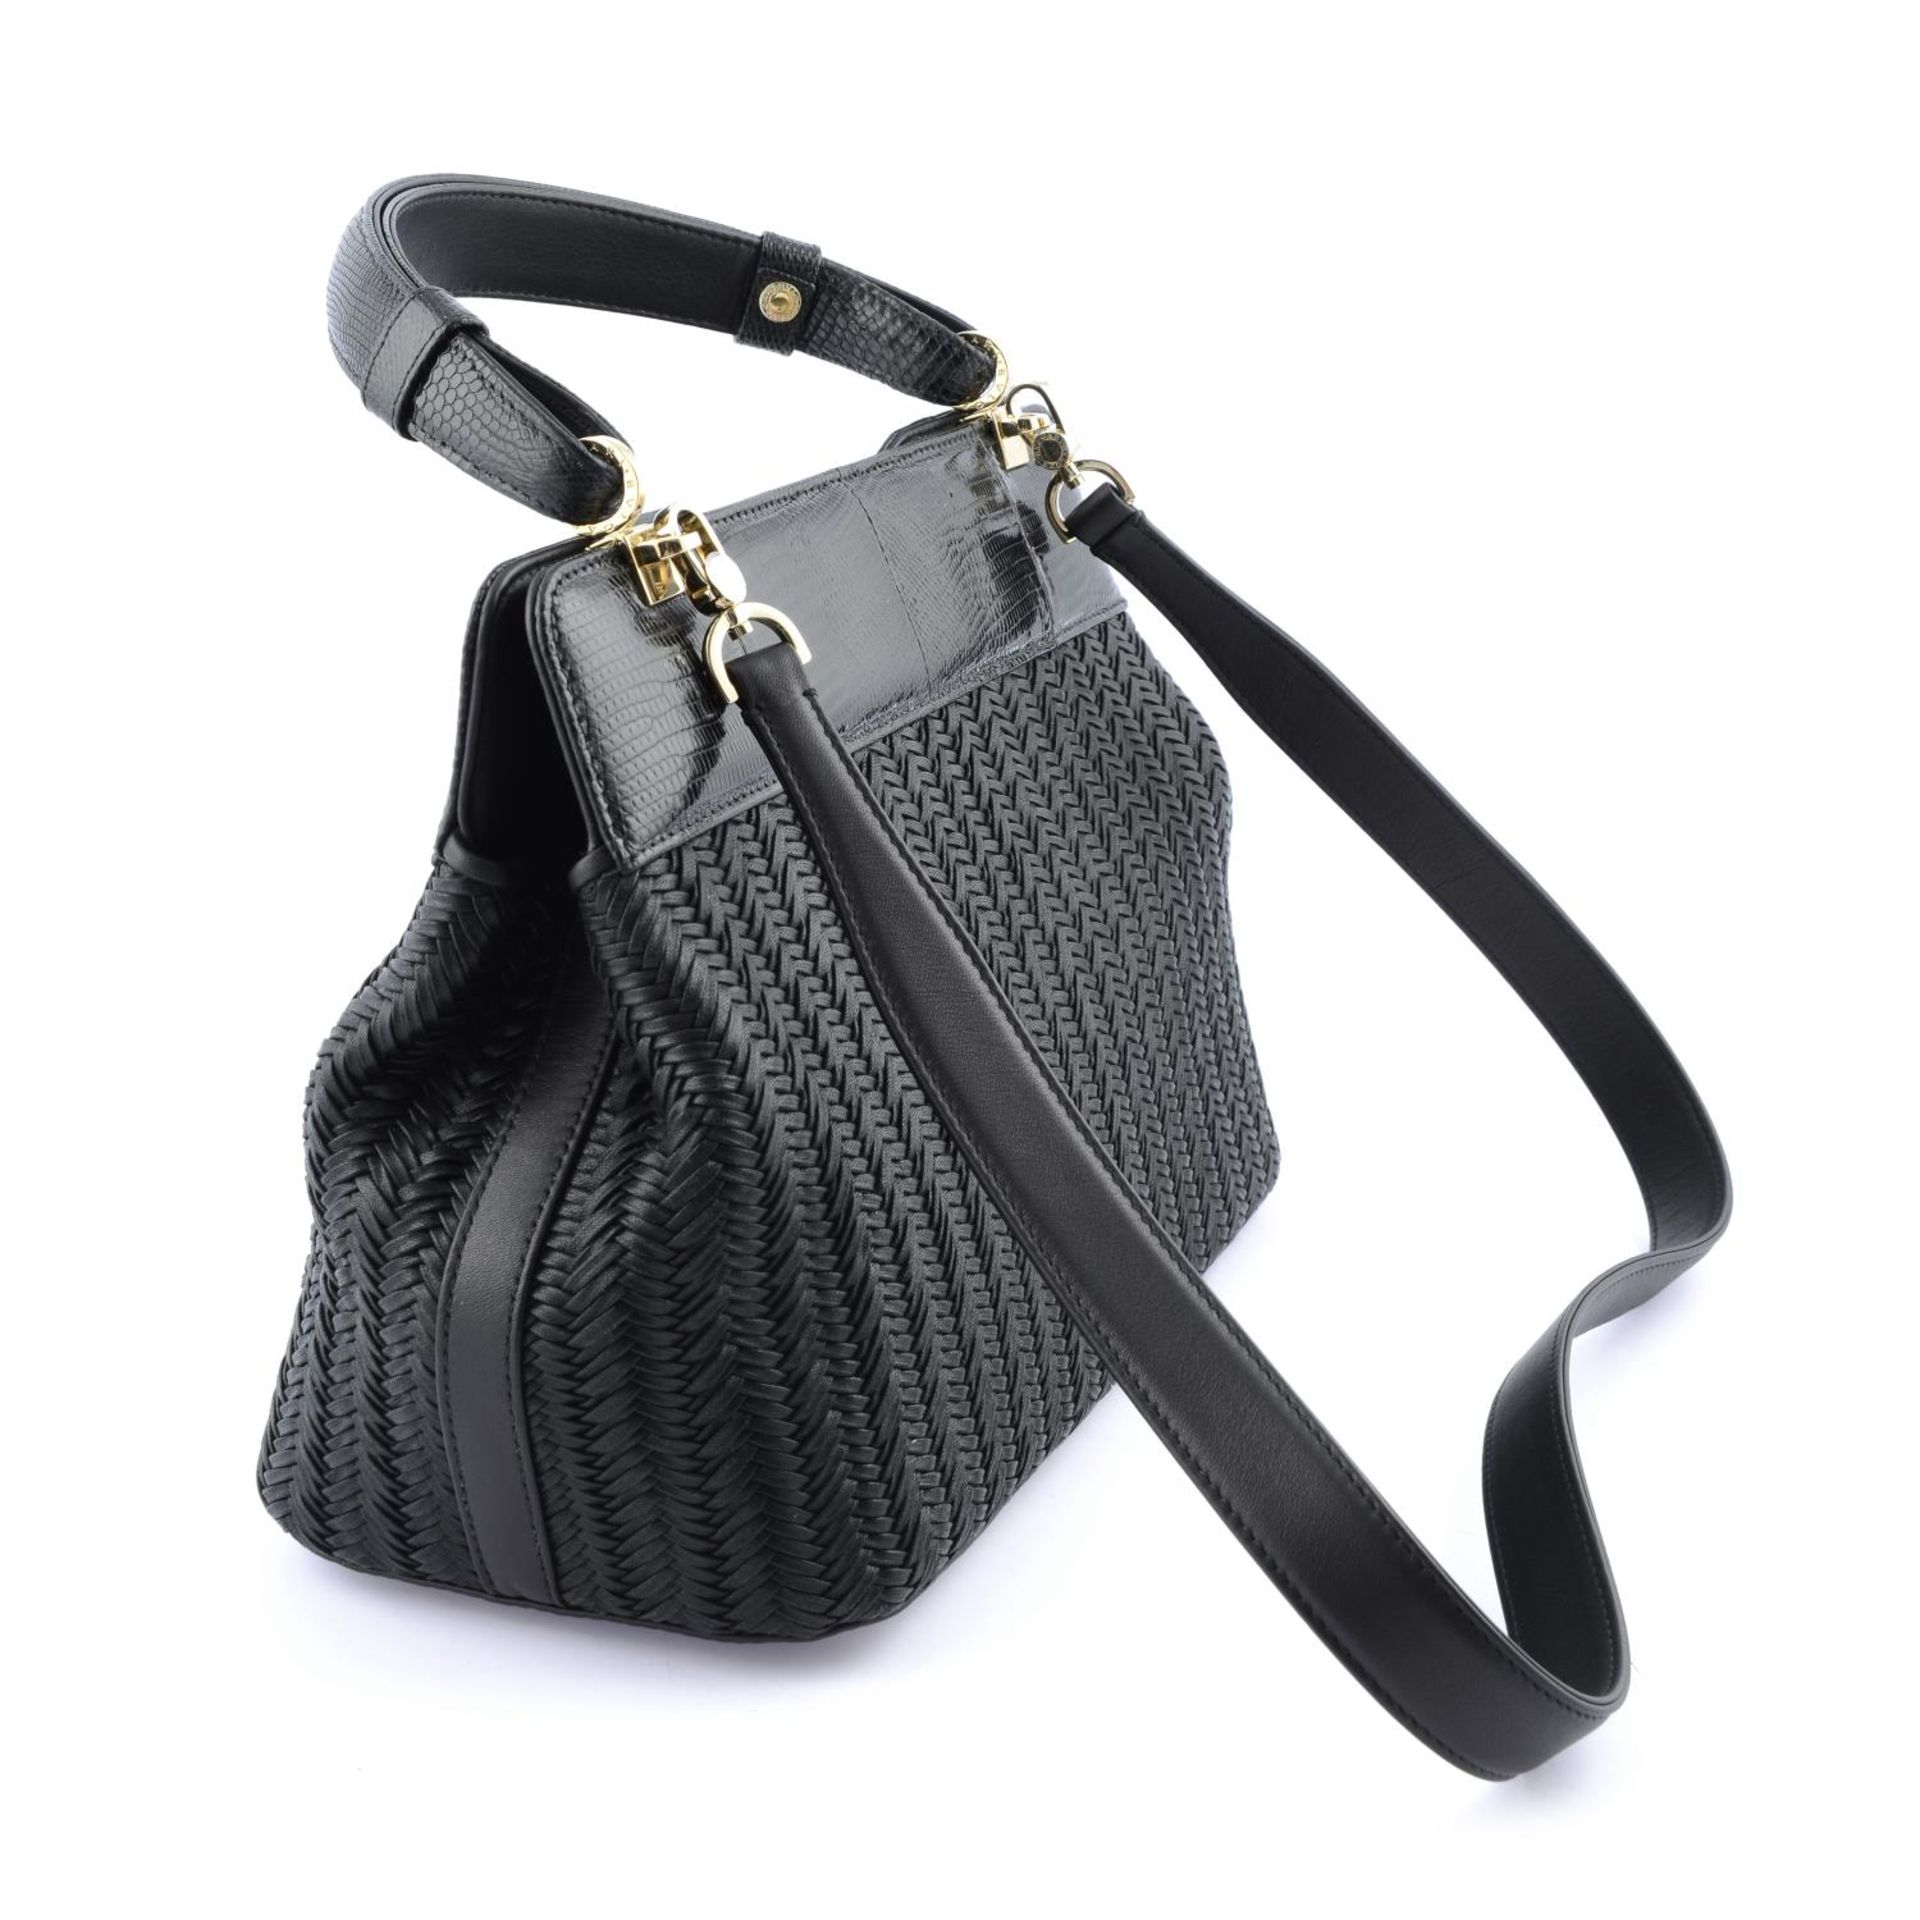 BULGARI - a woven leather Isabella Rossellini handbag. - Bild 3 aus 5